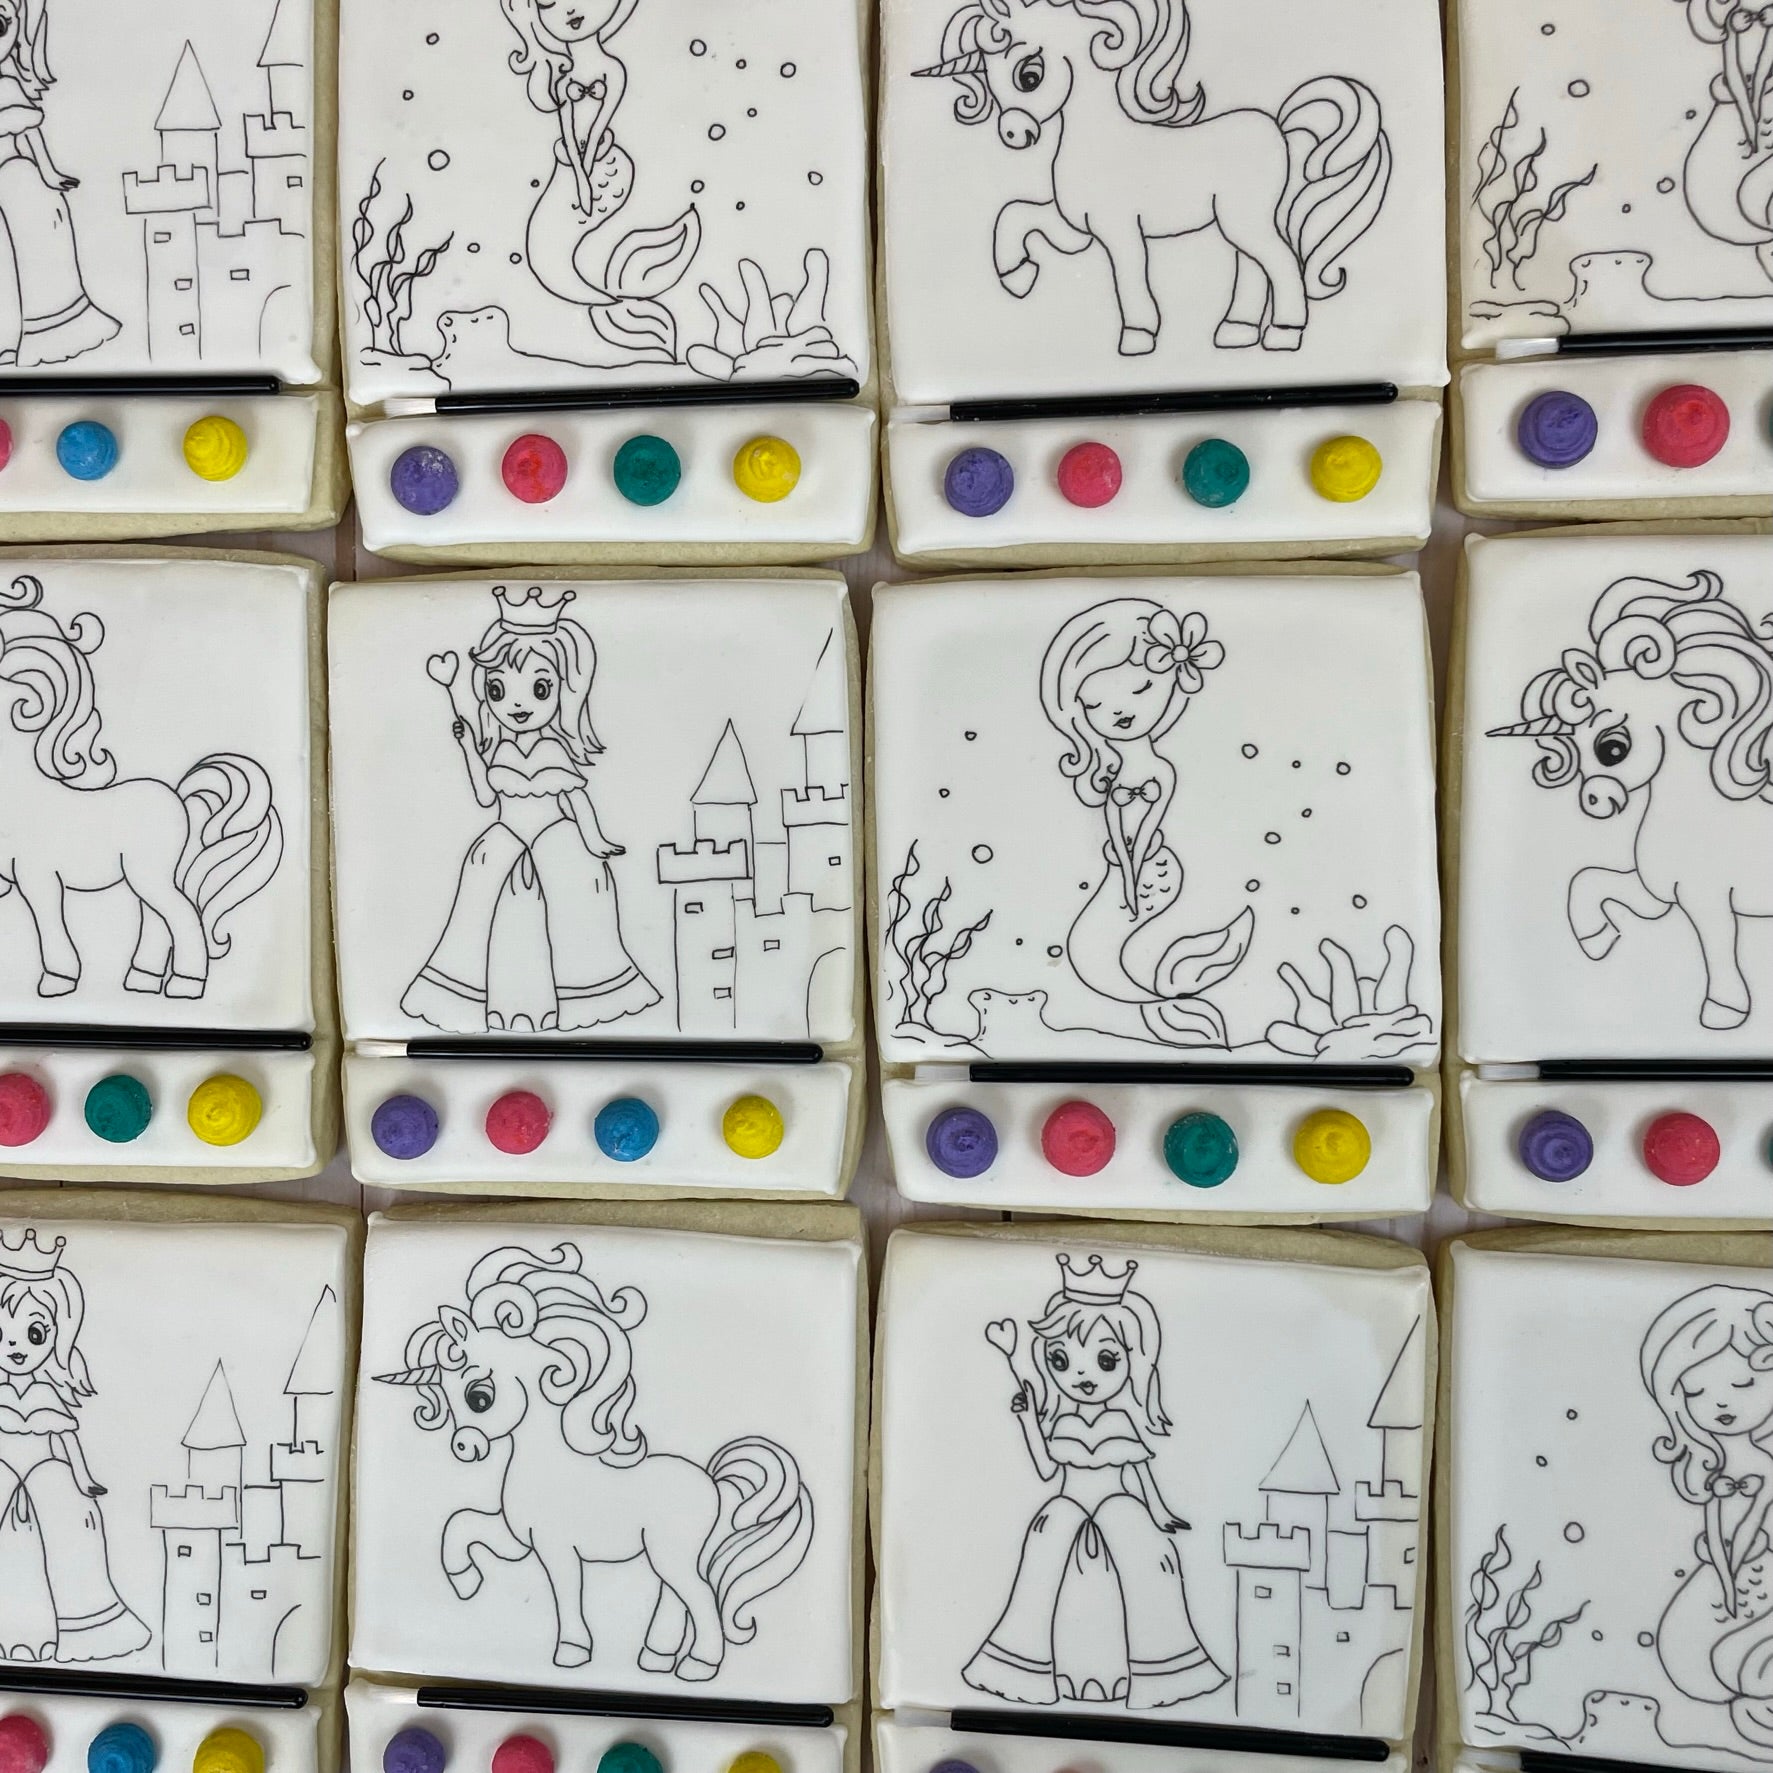 Kids Art Kit With Unicorn, Personalized Art Kit for Kids, Art